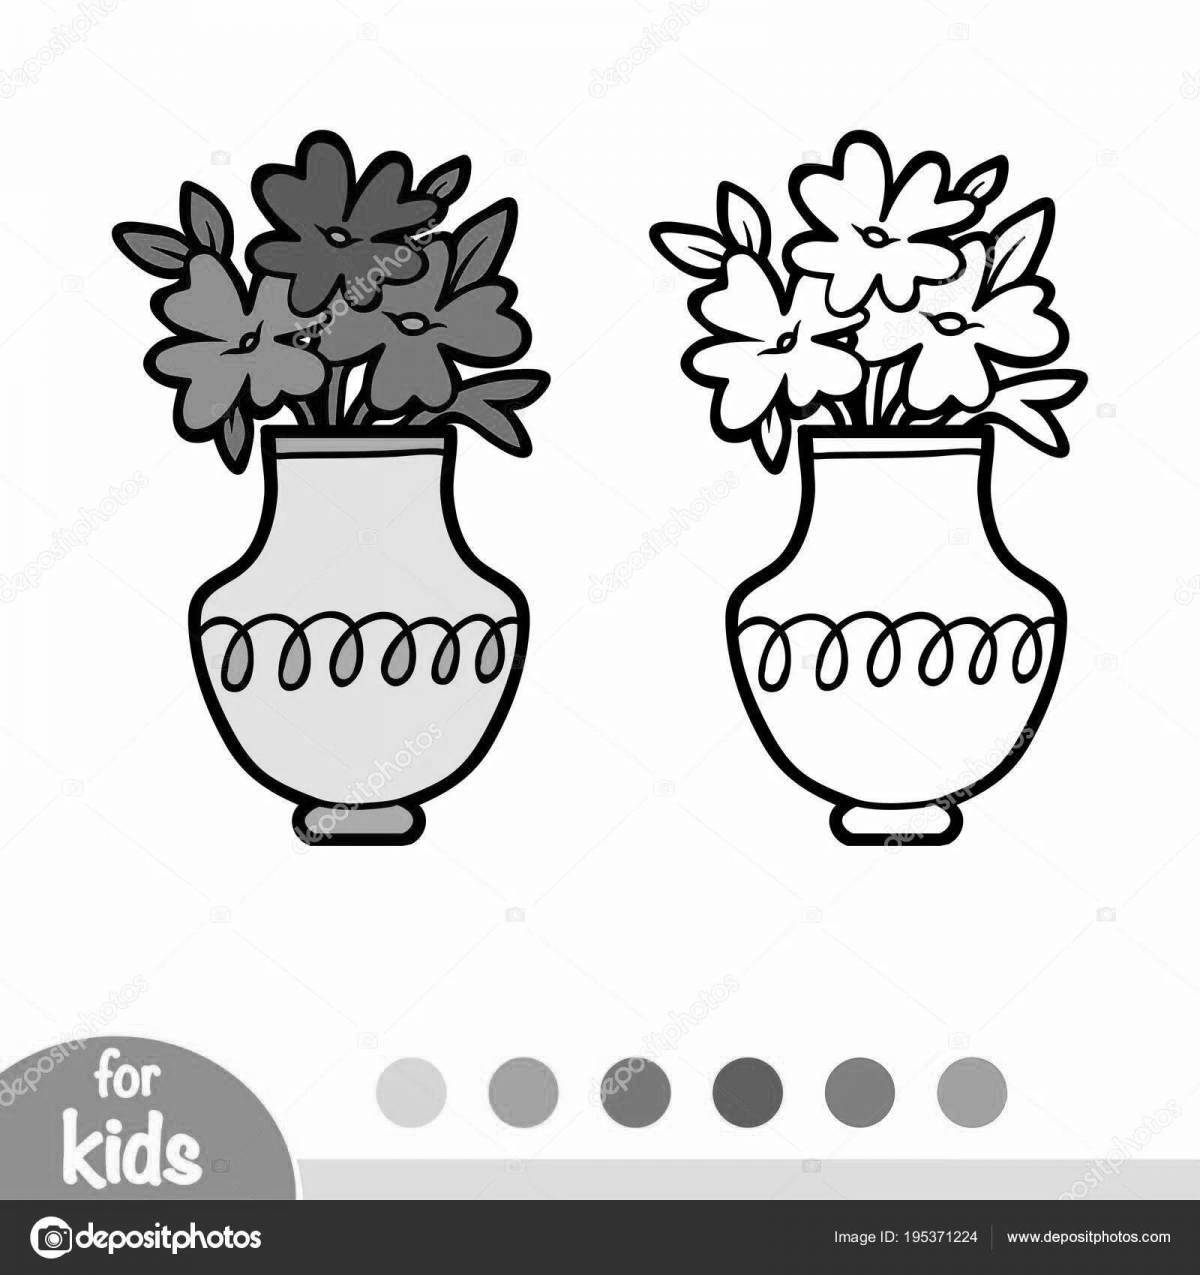 Extreme flower vase coloring for kids